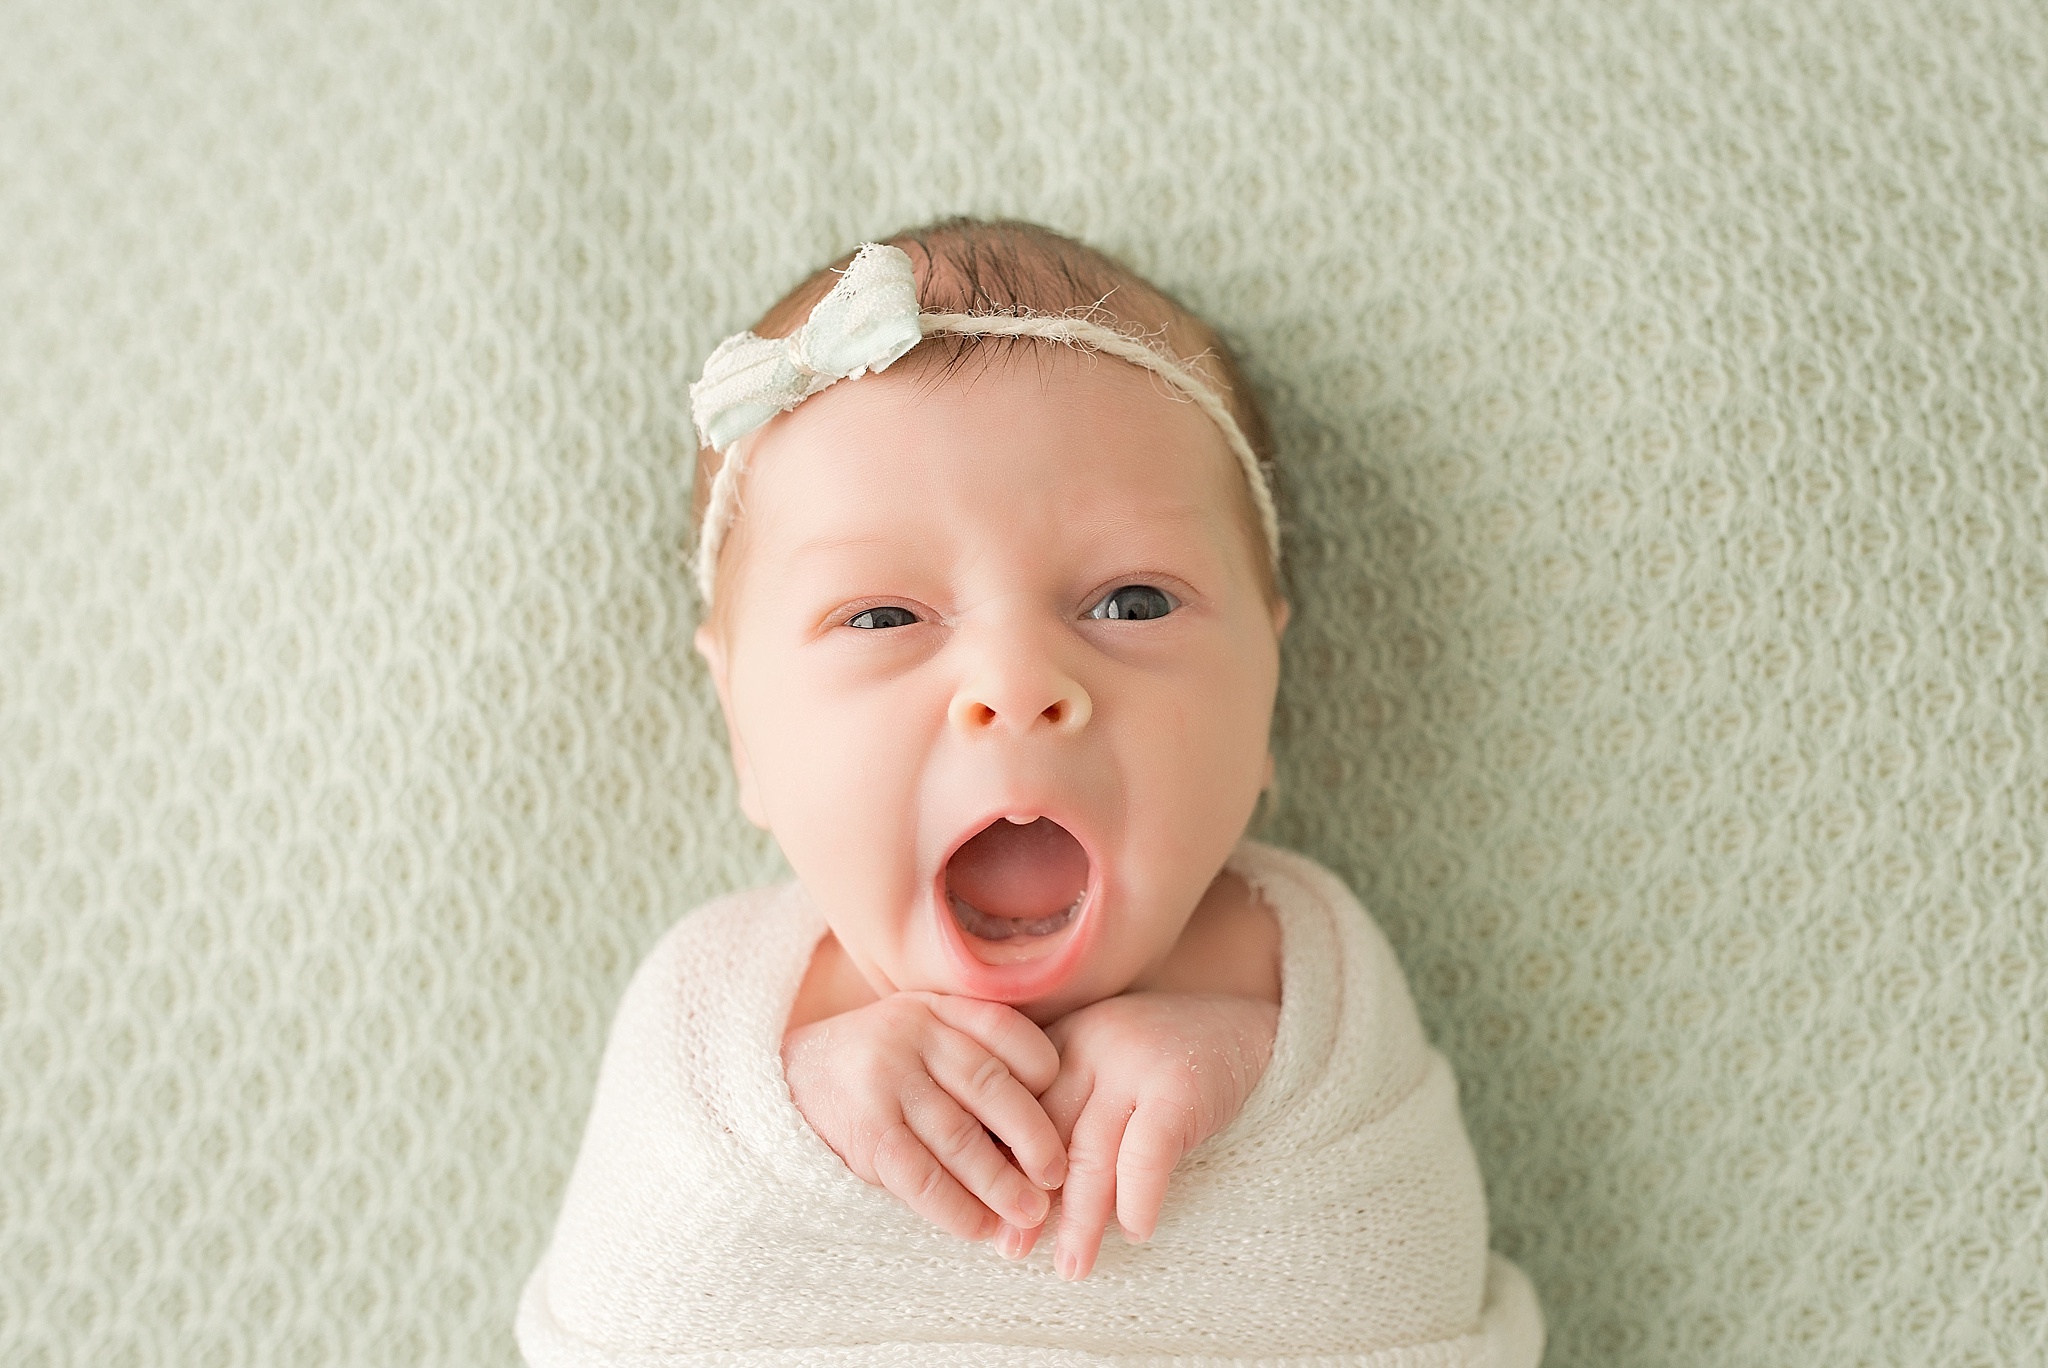 baby girl yawning on green blanket